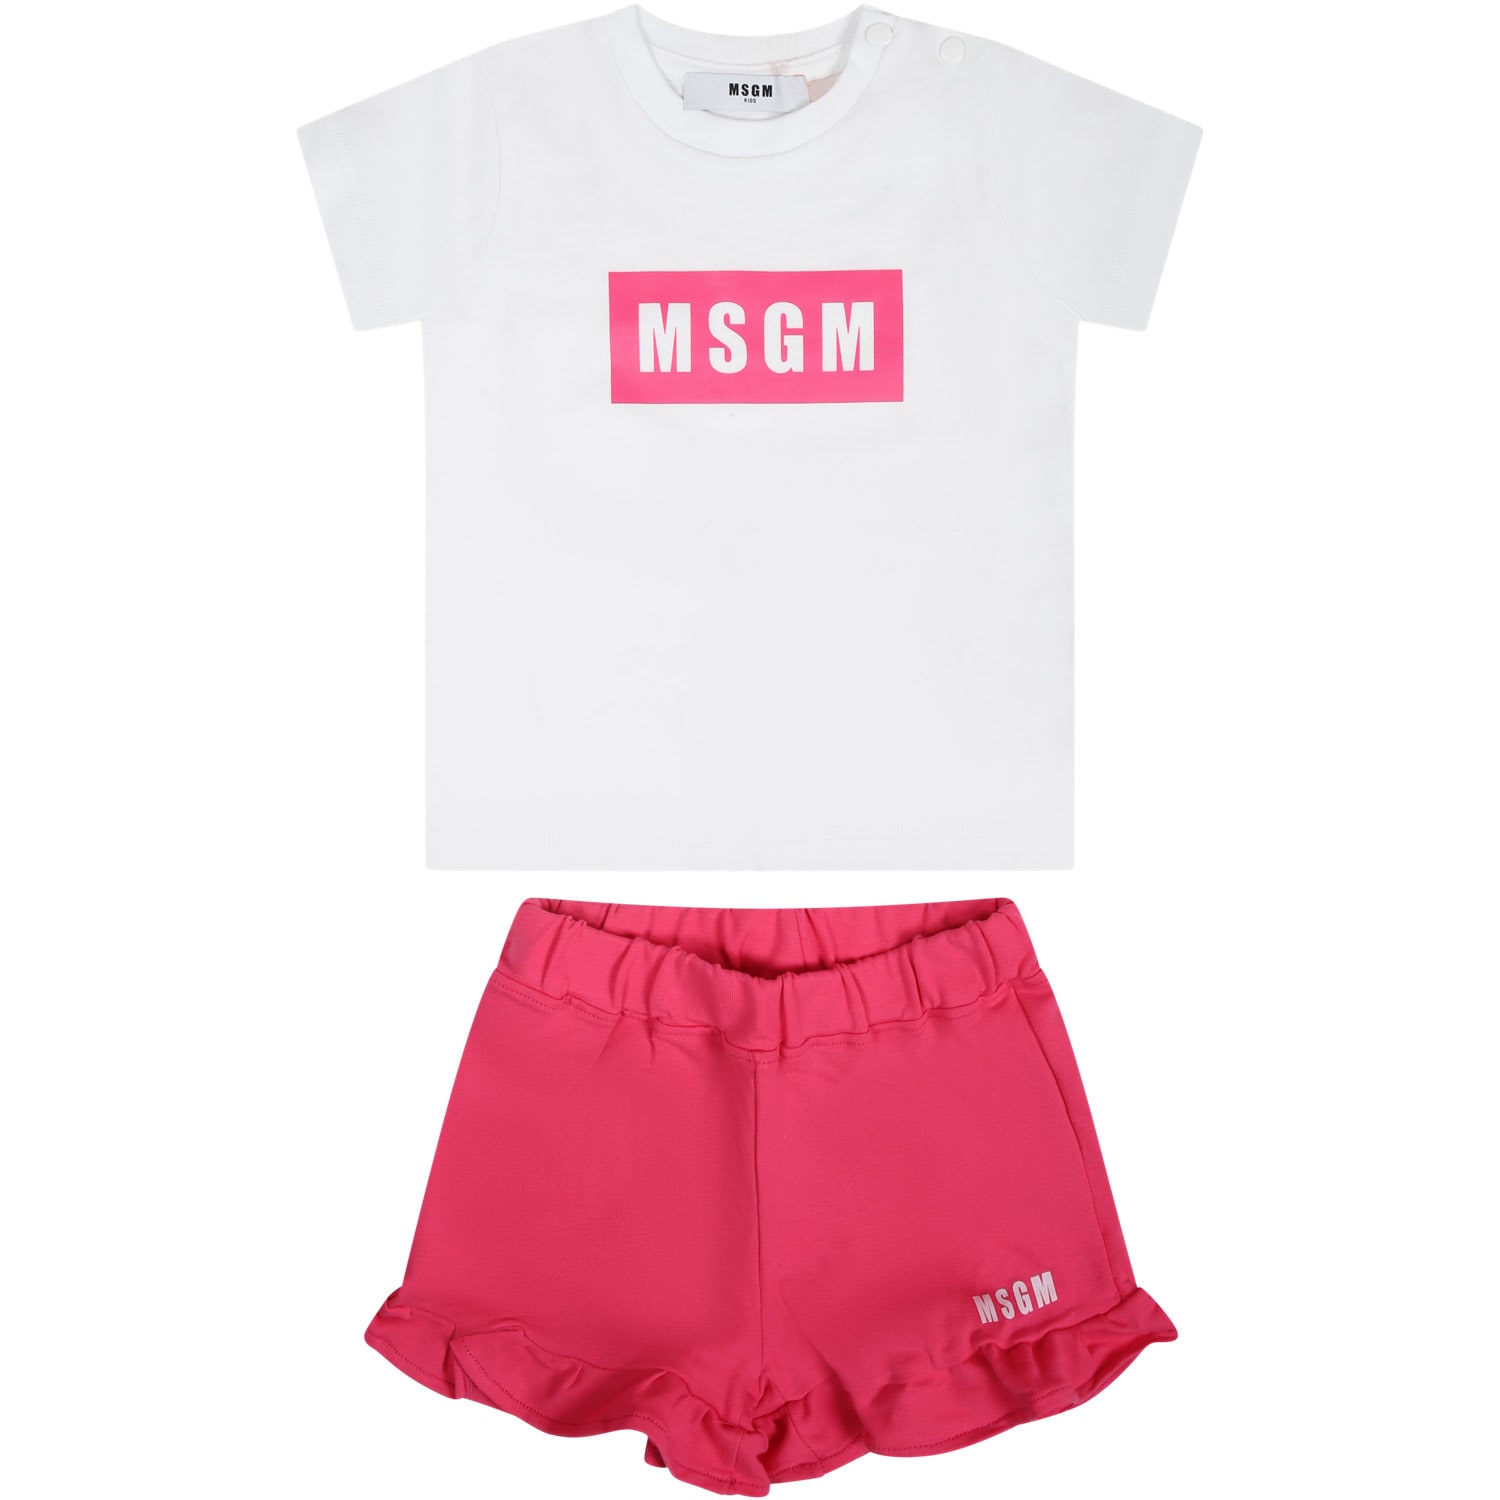 Msgm Fuchsia Set For Baby Girl With Logo